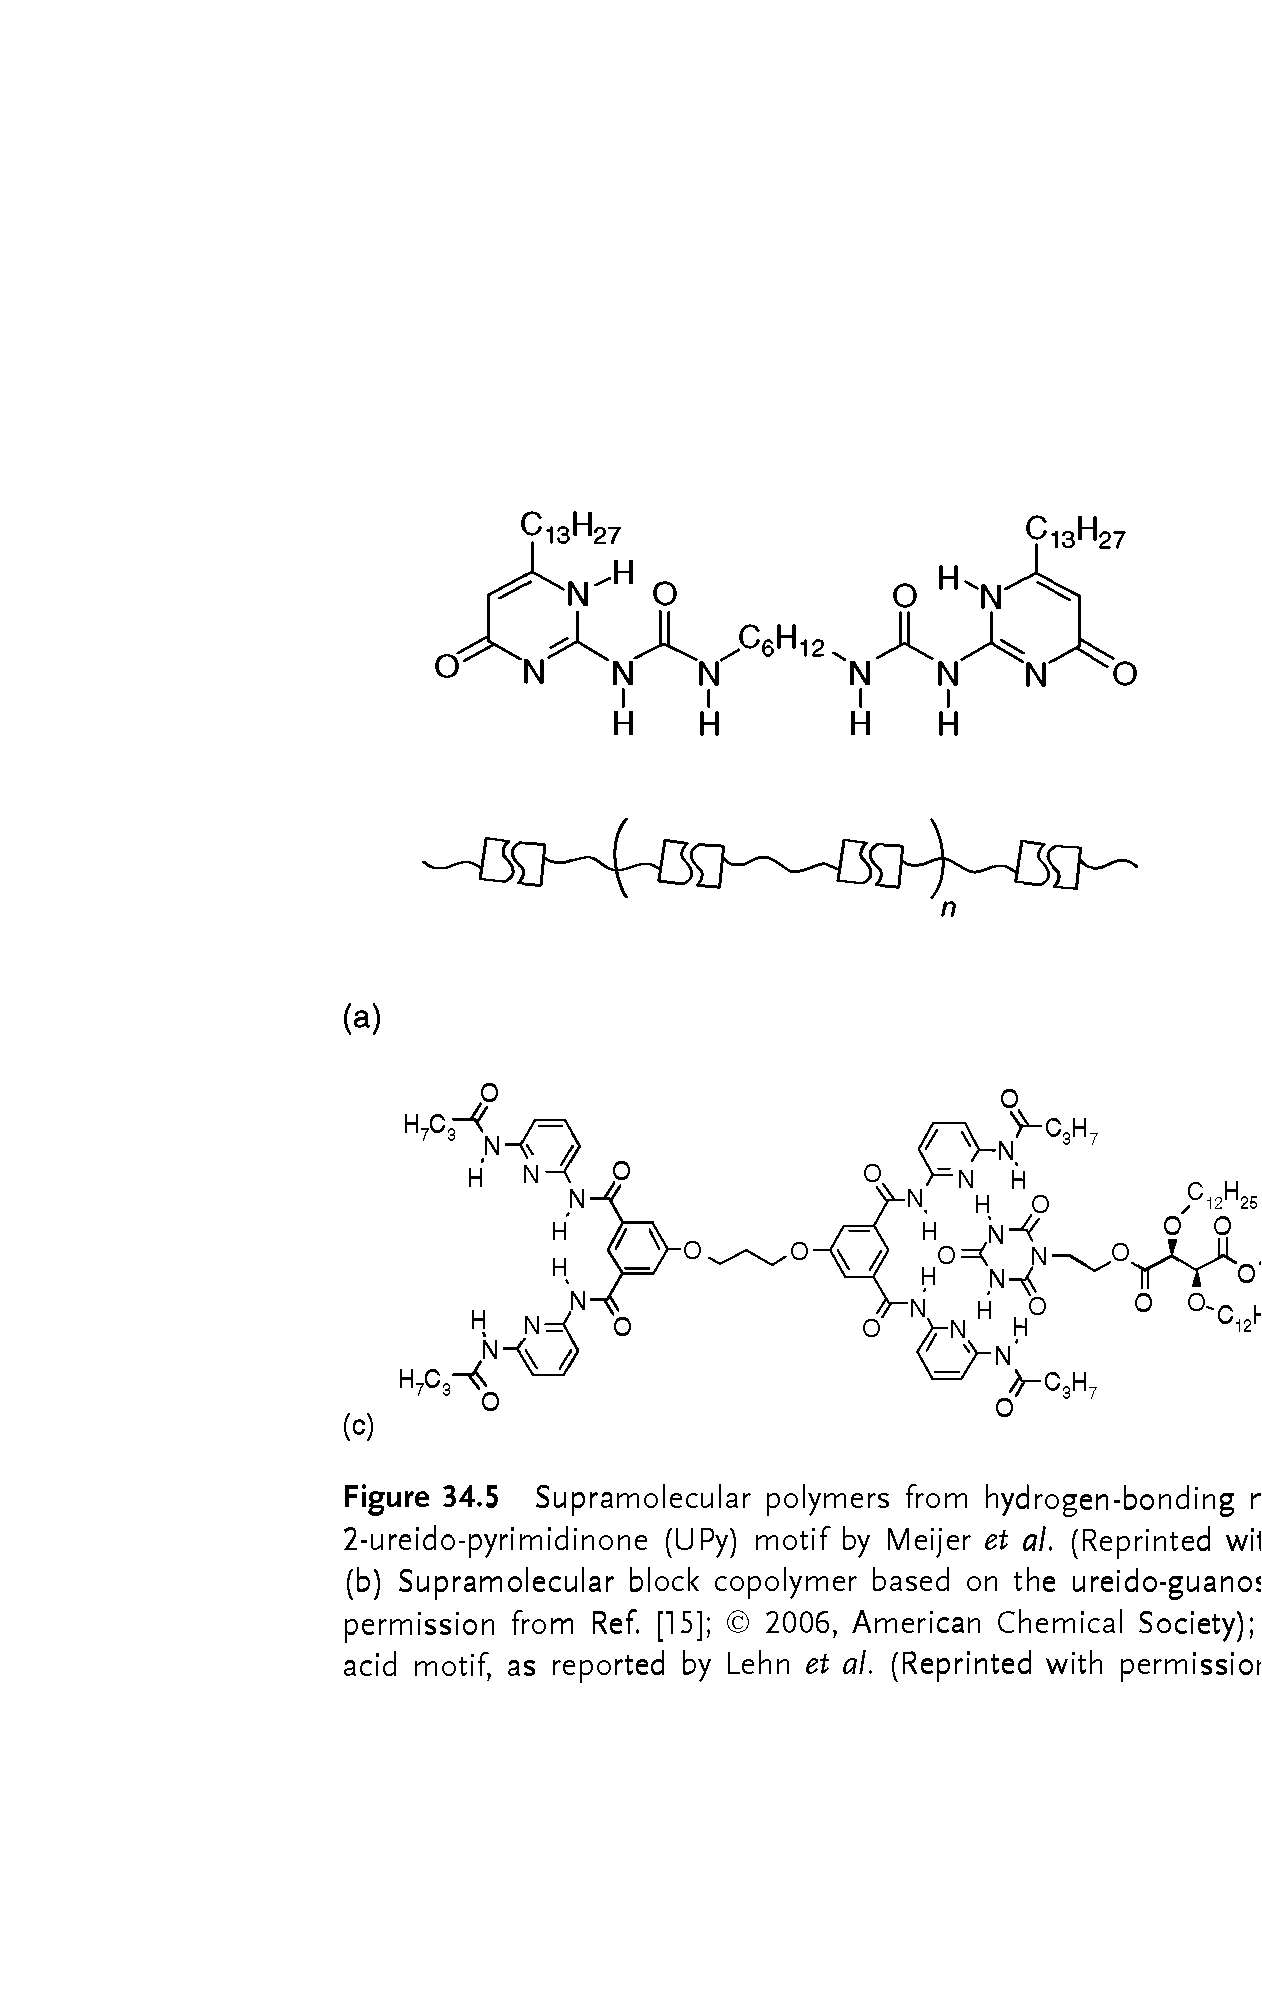 Figure 34.5 Supramolecular polymers from hydrogen-bonding r 2-ureido-pyrimidinone (UPy) motif by Meijer et al. (Reprinted wil (b) Supramolecular block copolymer based on the ureido-guano permission from Ref. [15] 2006, American Chemical Society) acid motif as reported by Lehn et al. (Reprinted with permissiot...